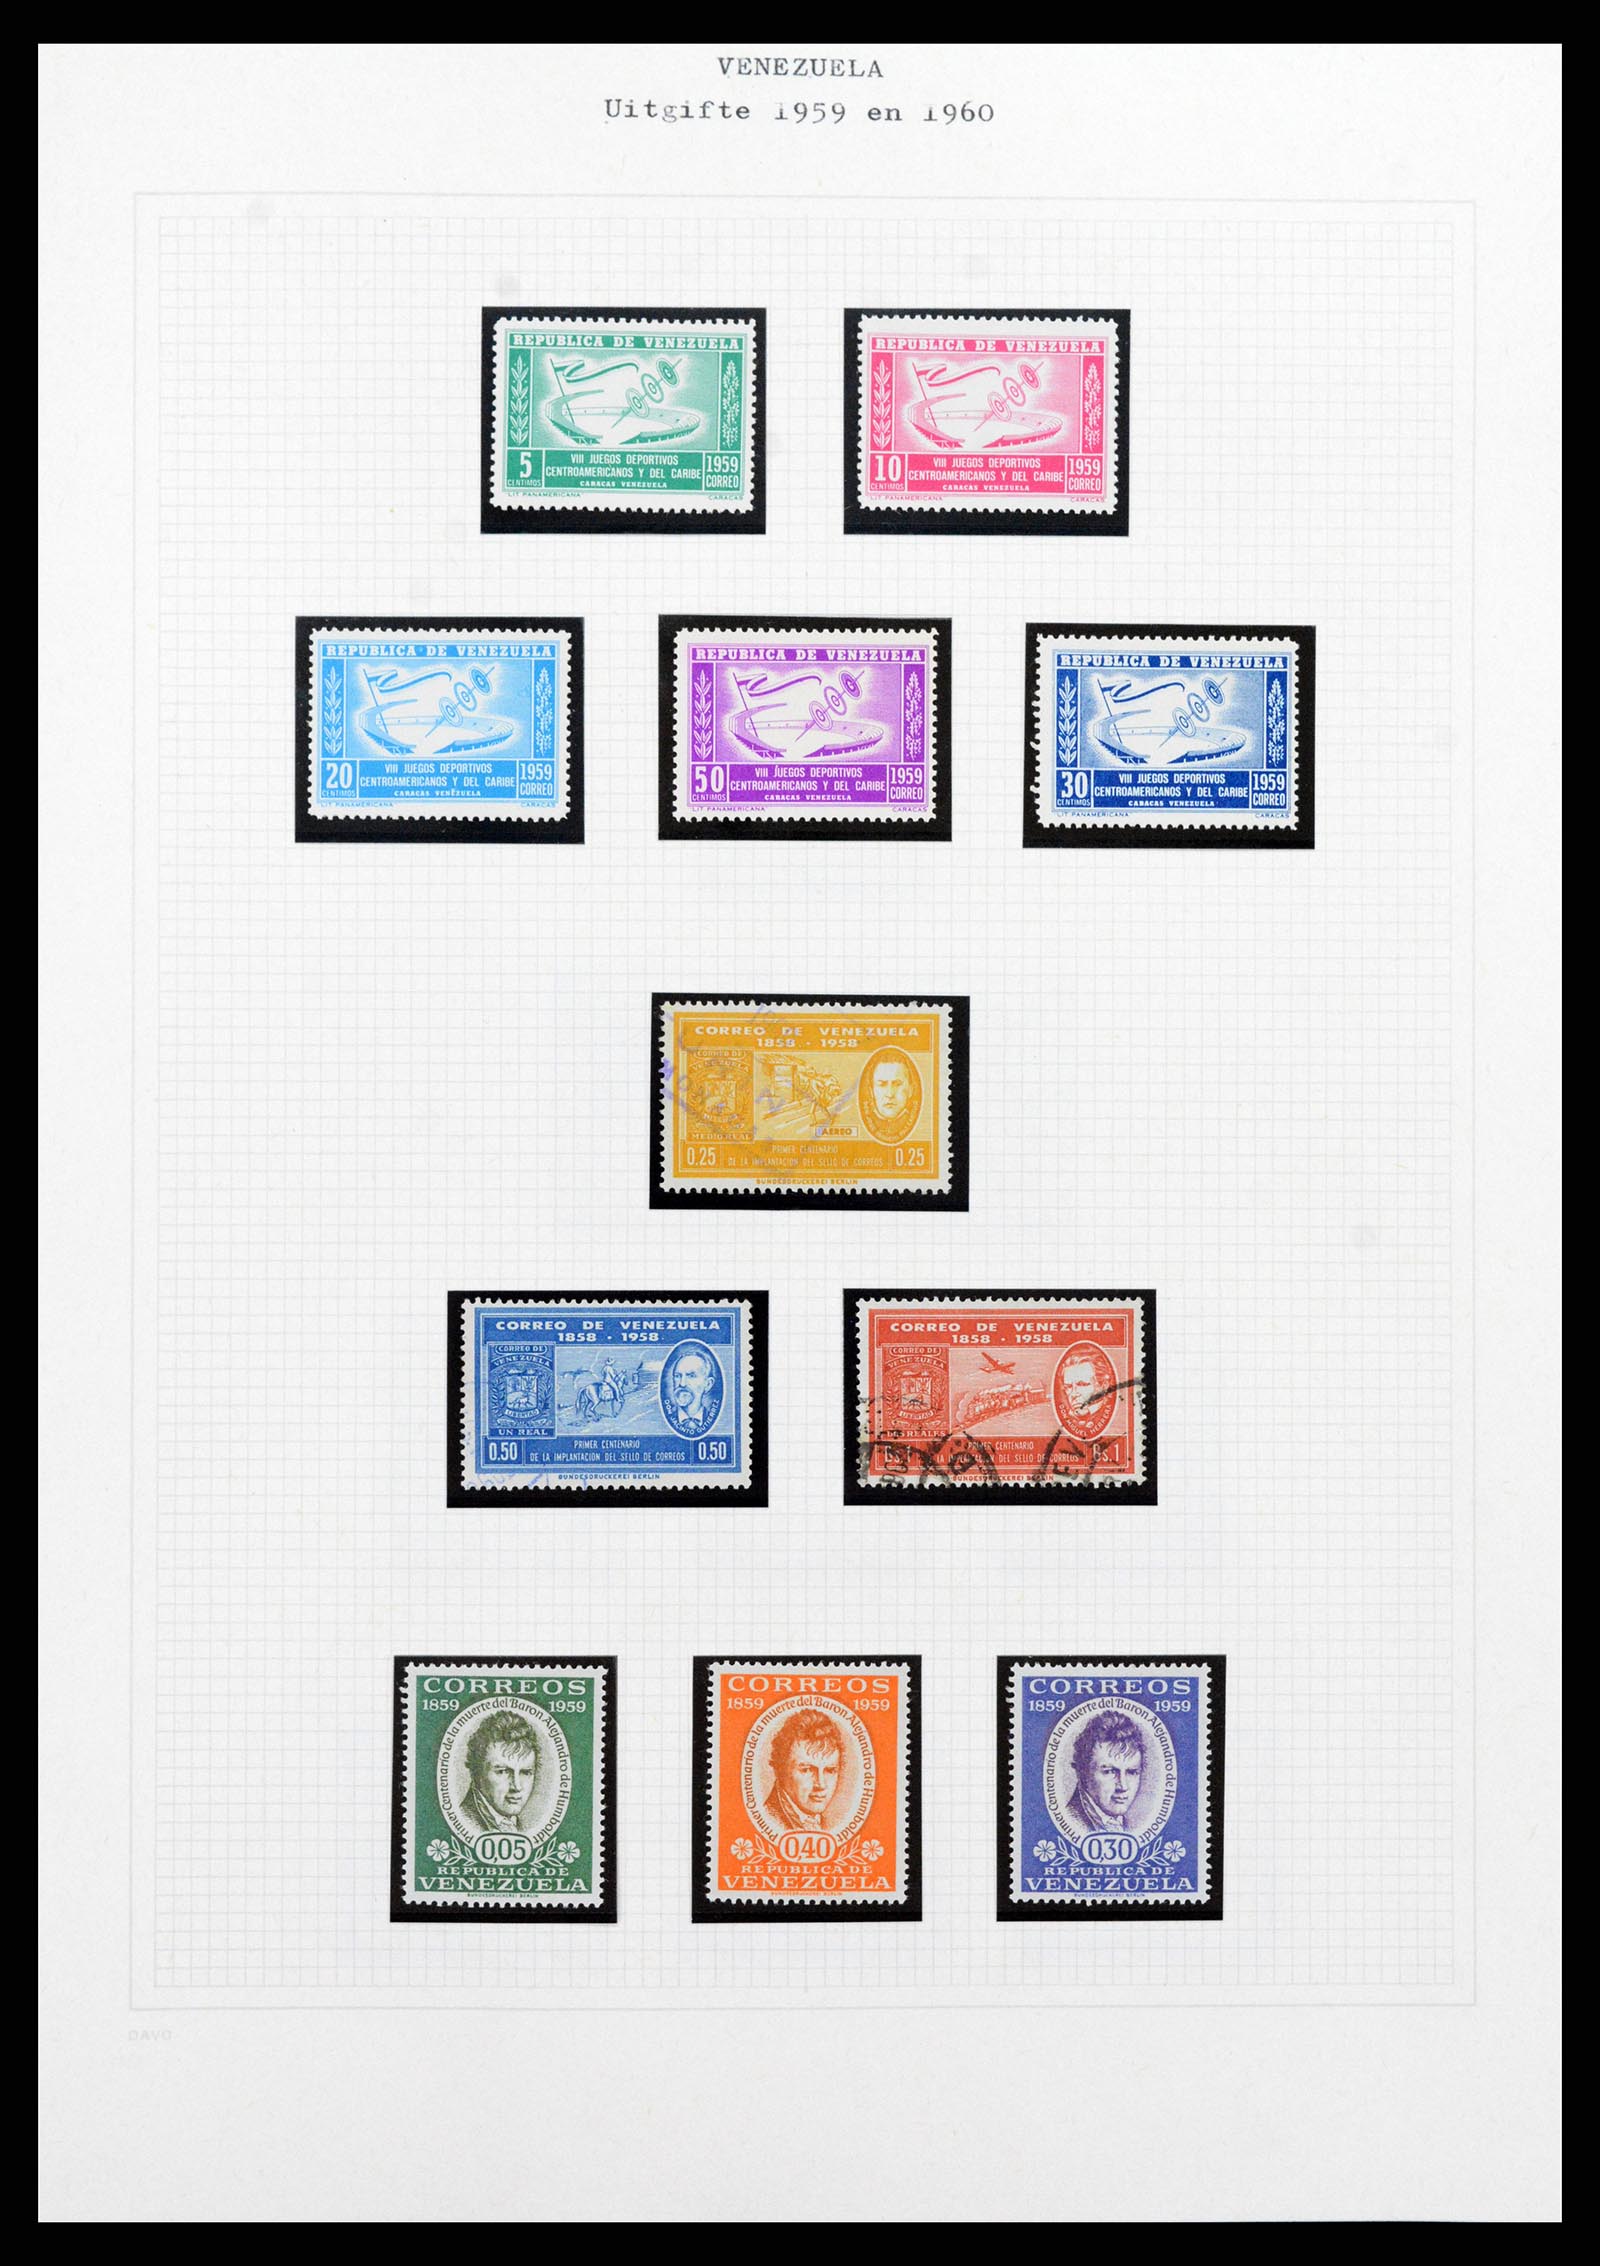 37353 034 - Stamp collection 37353 Venezuela 1880-1960.